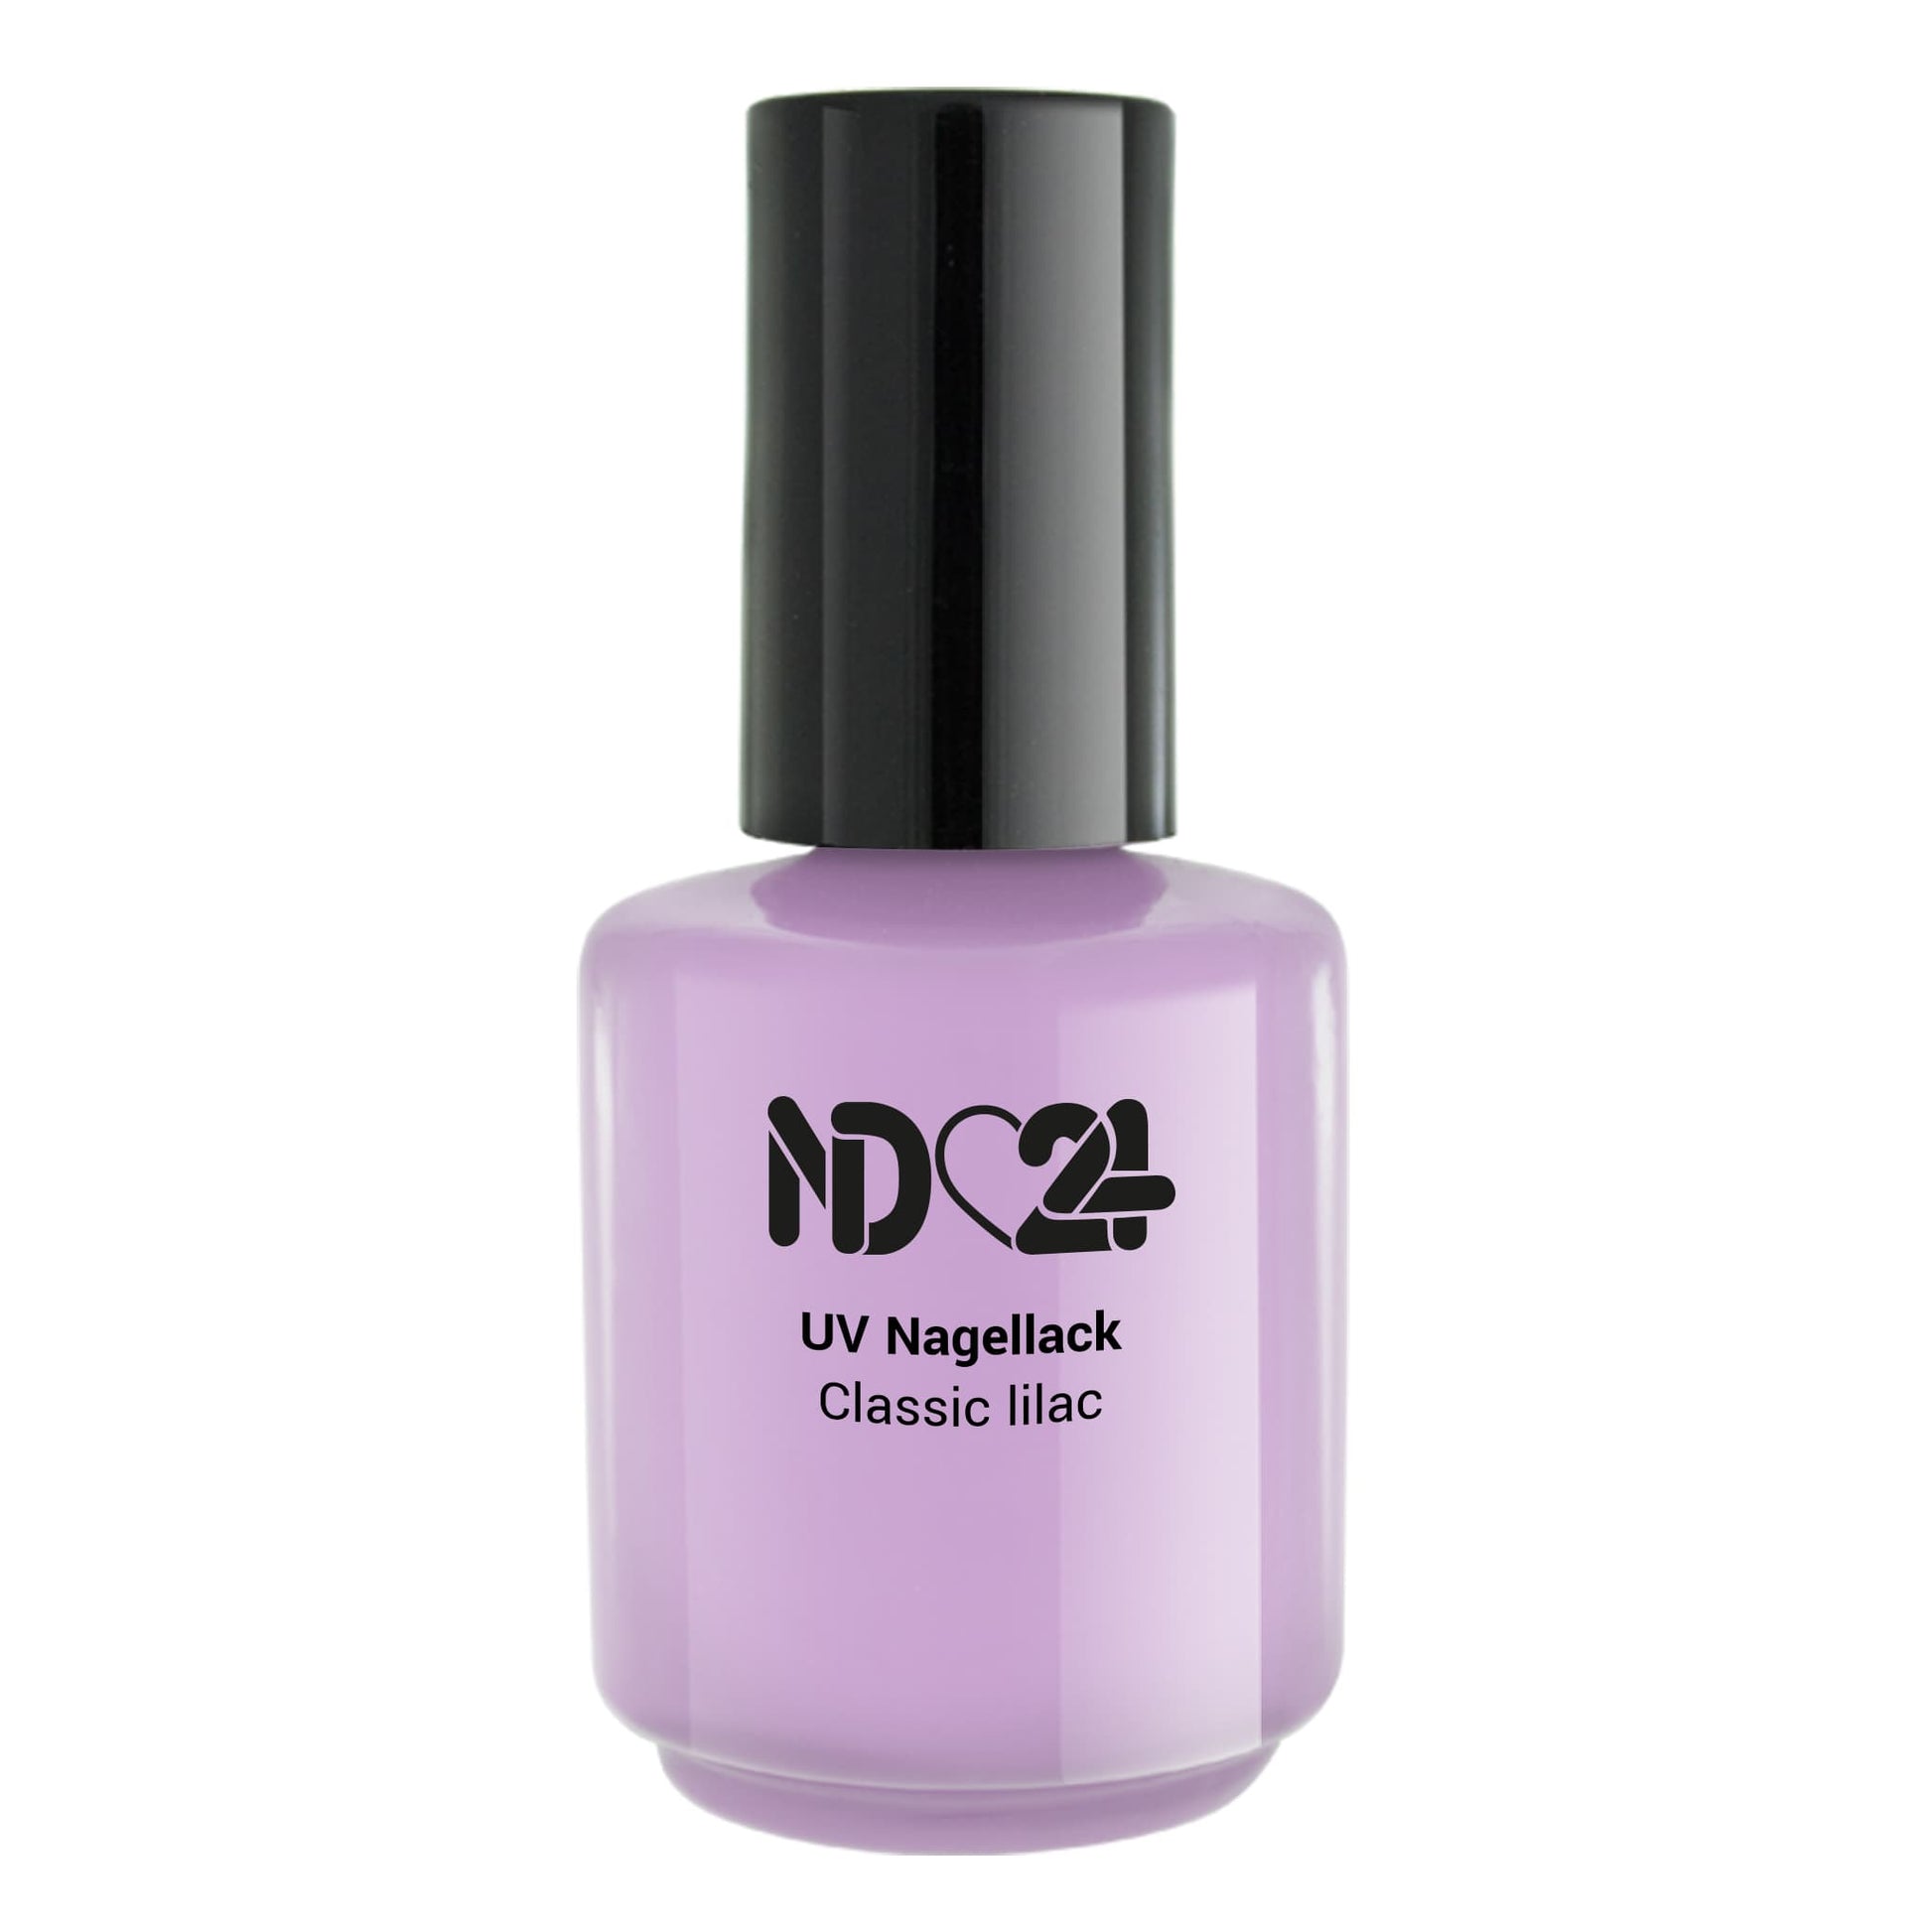 UV Nagellack Classic lilac